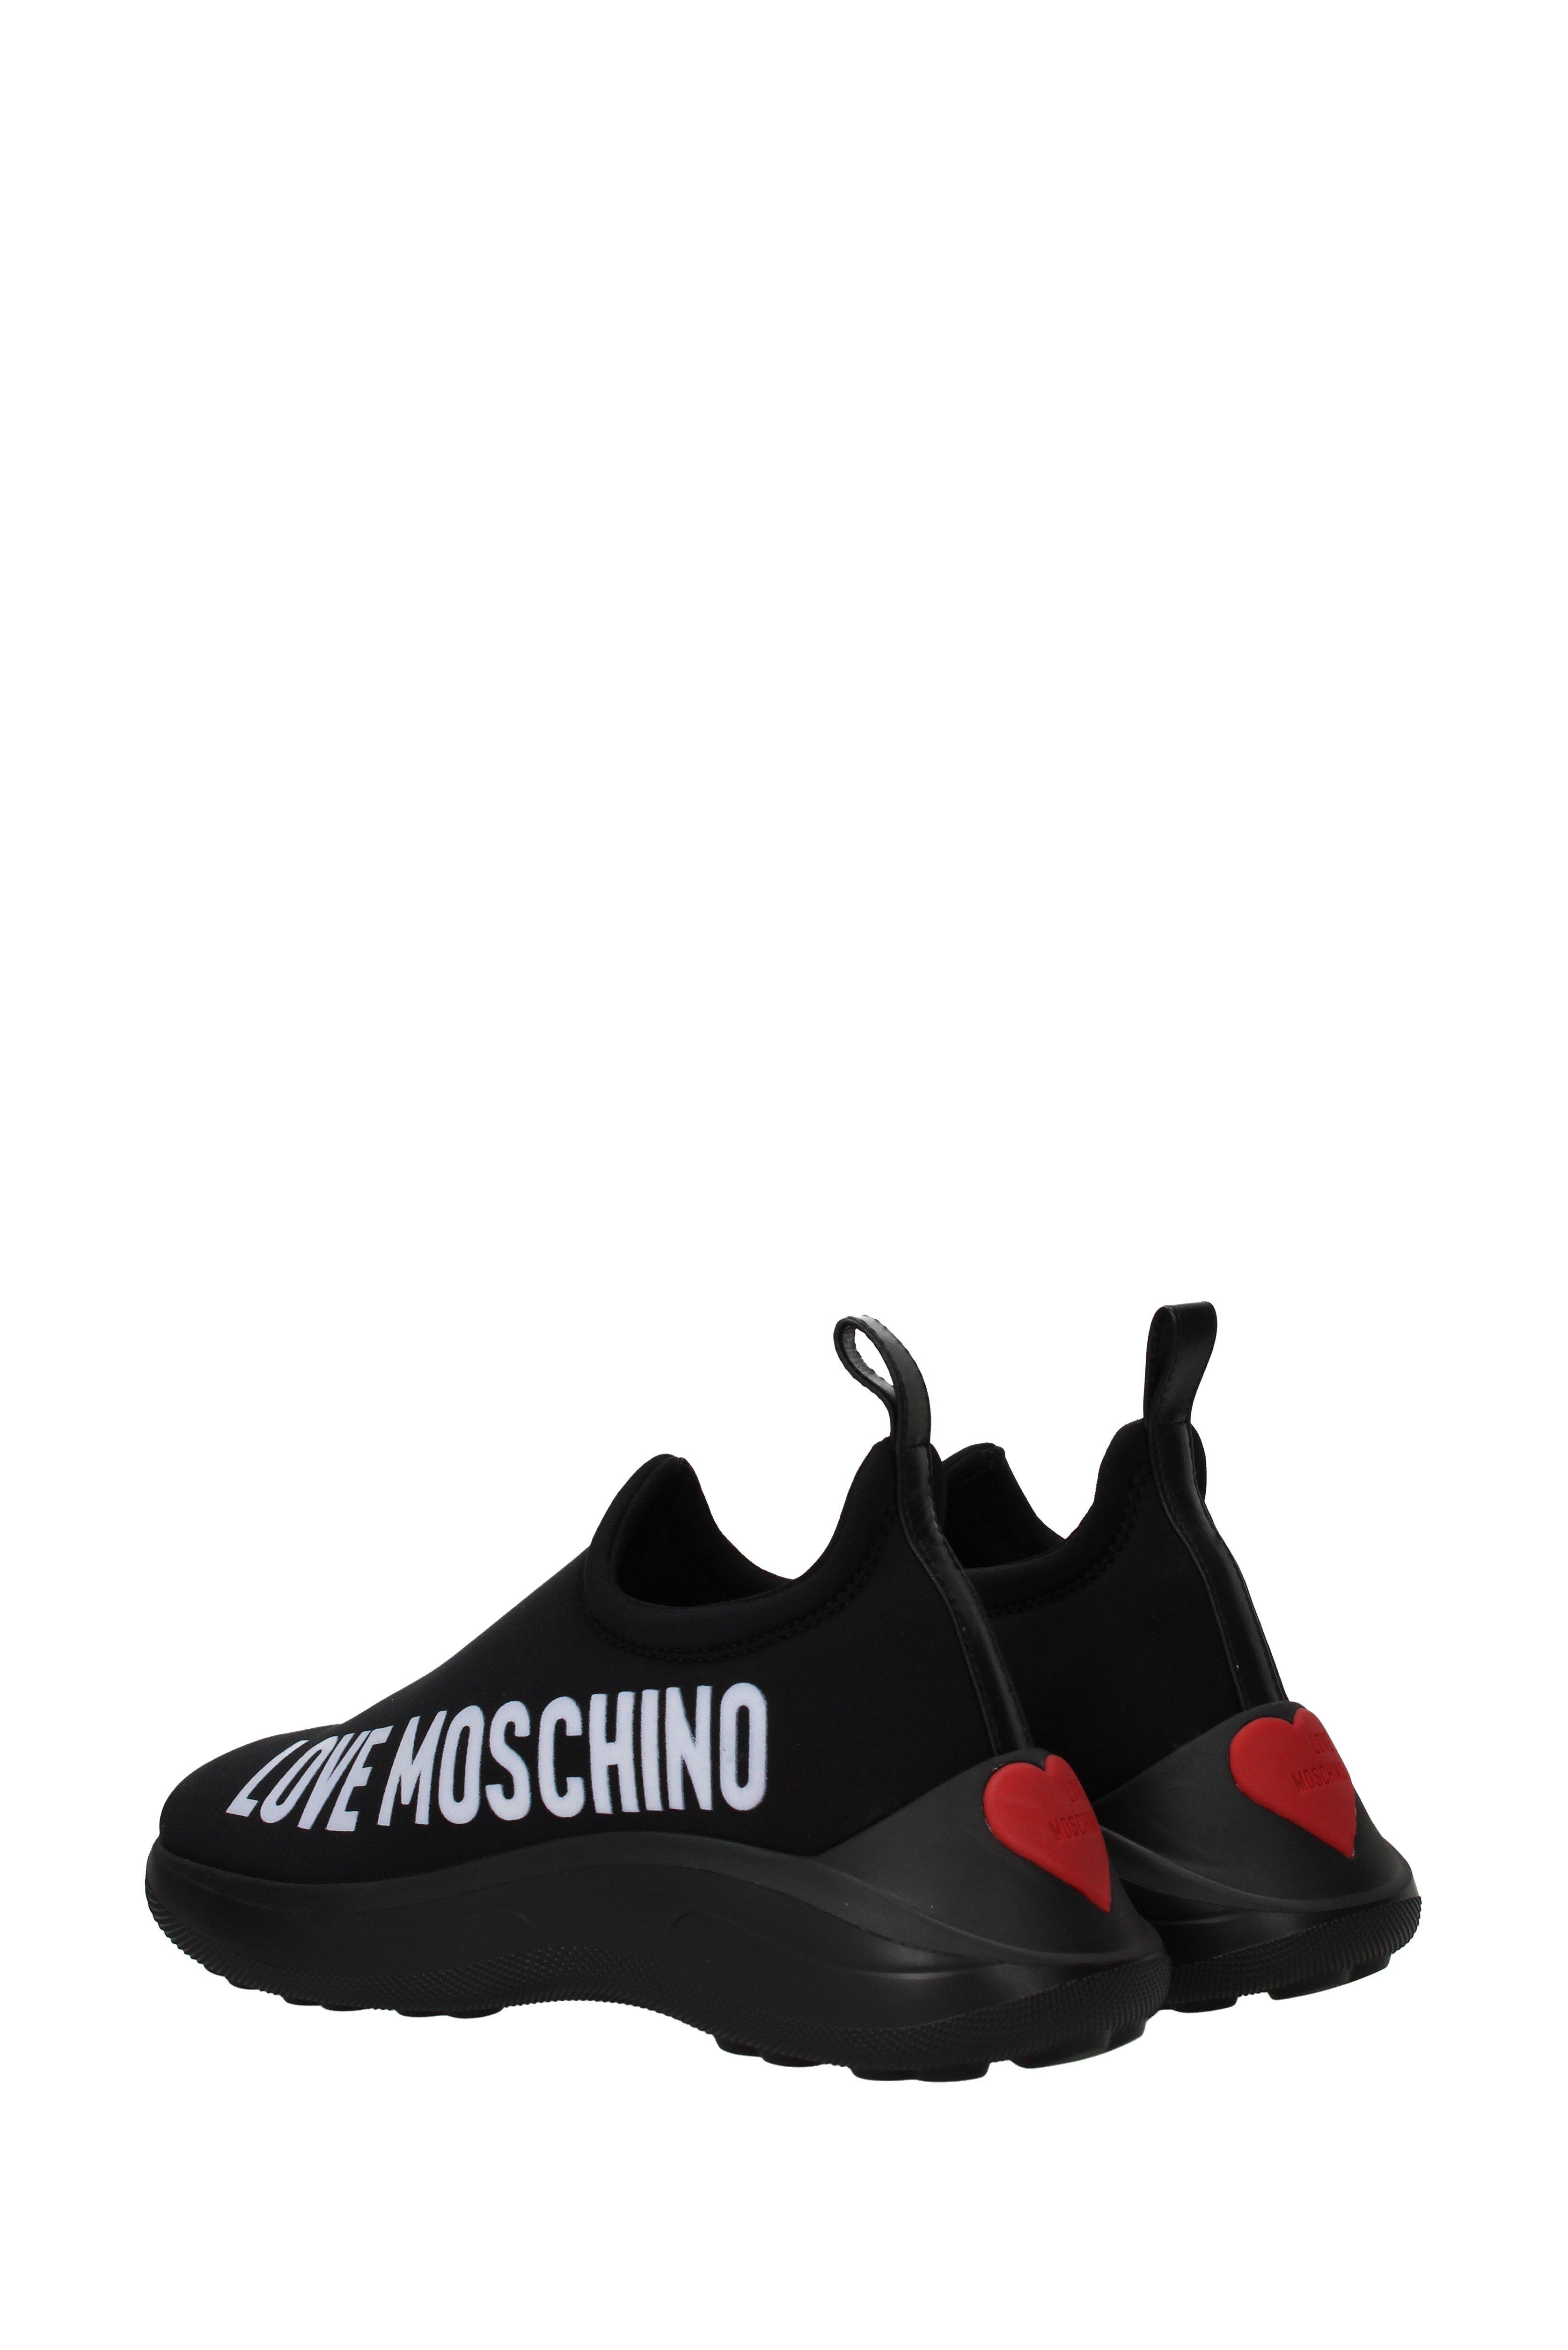 moschino women sneakers